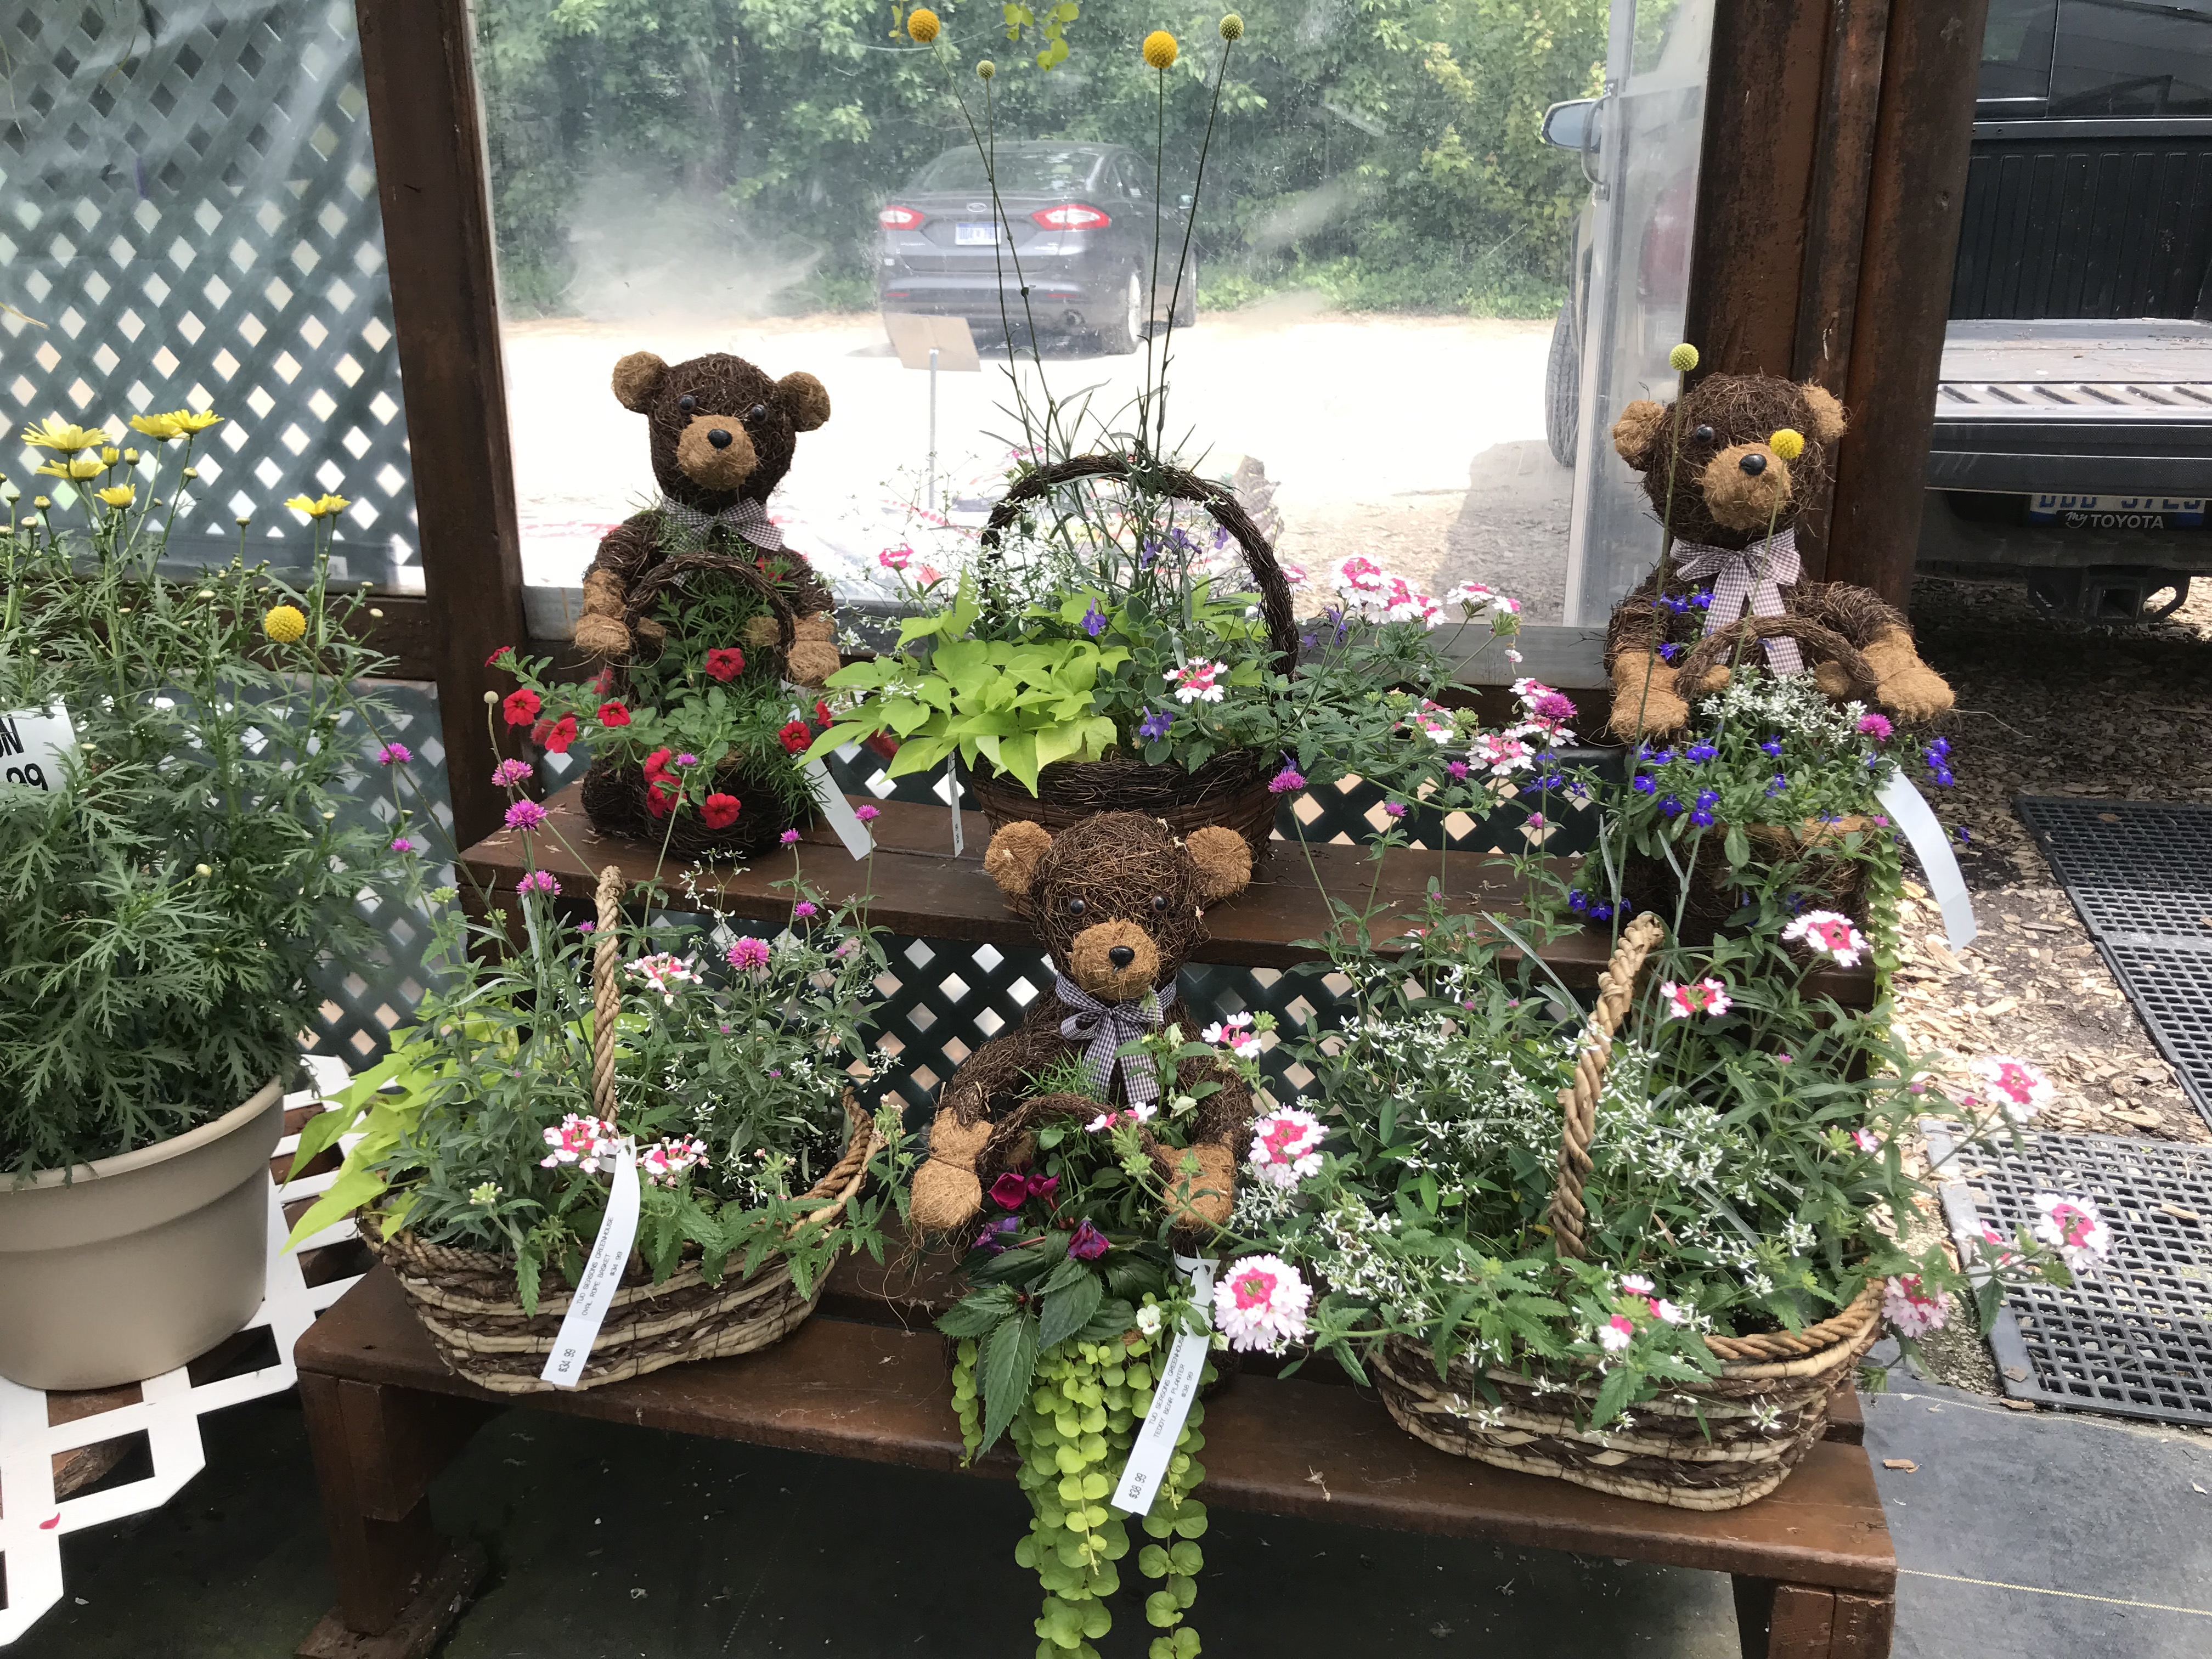 Plants and teddy bears